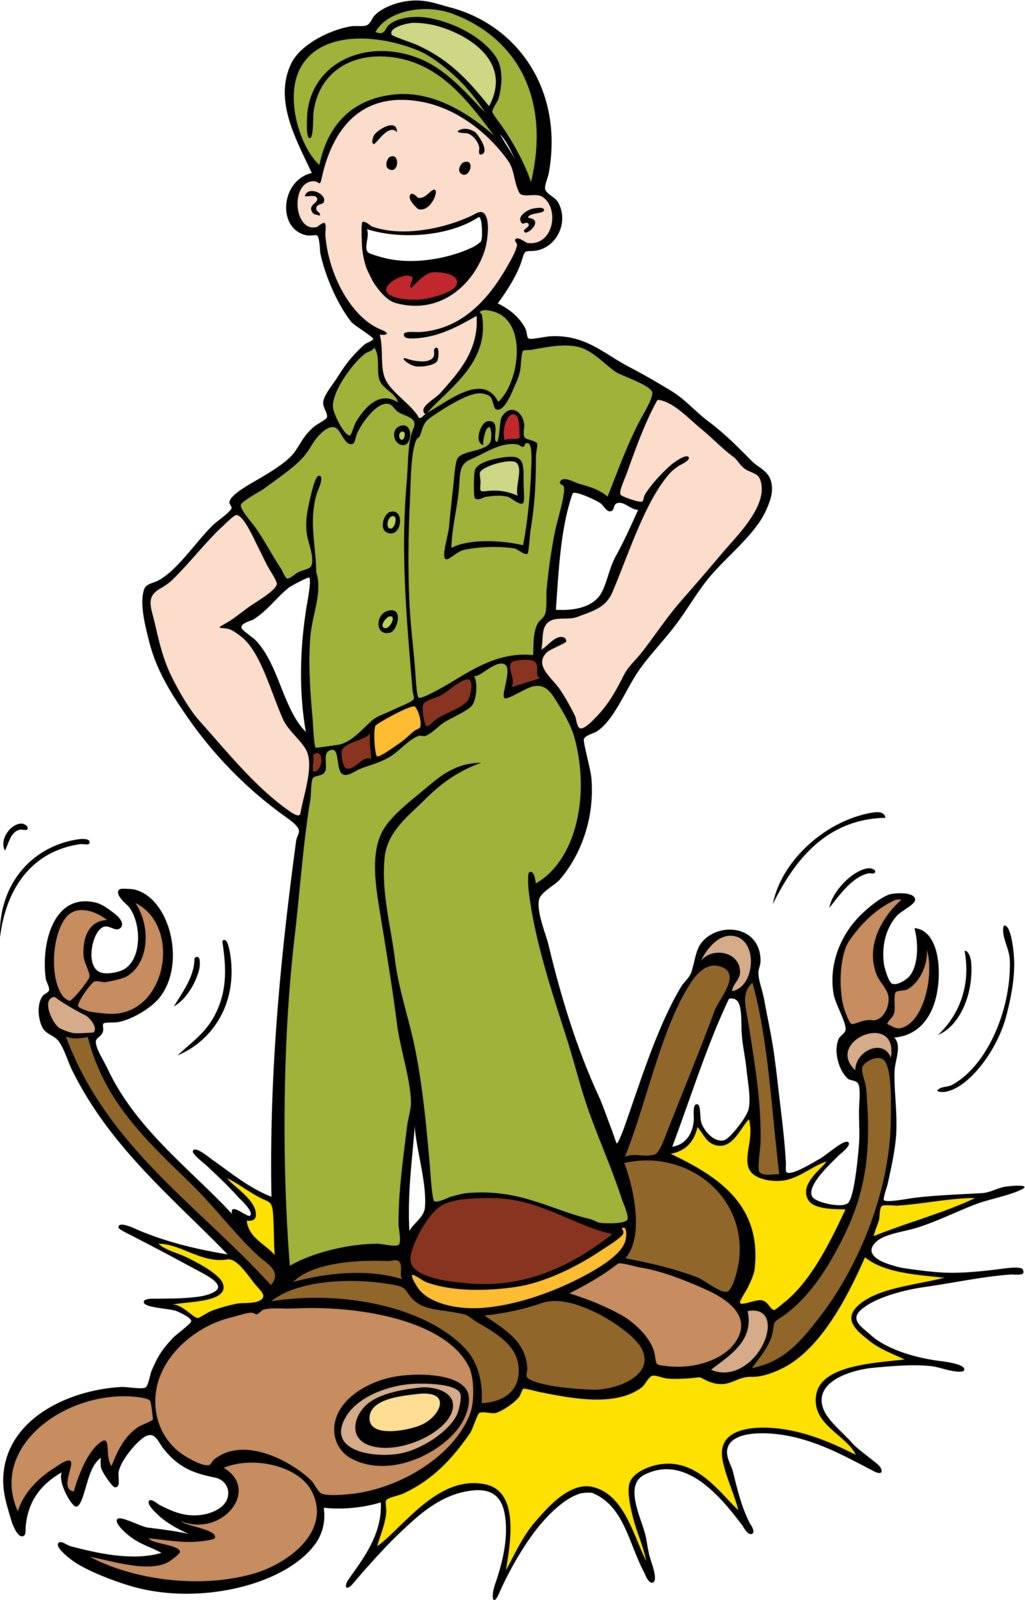 Cartoon image of exterminator killing termites.